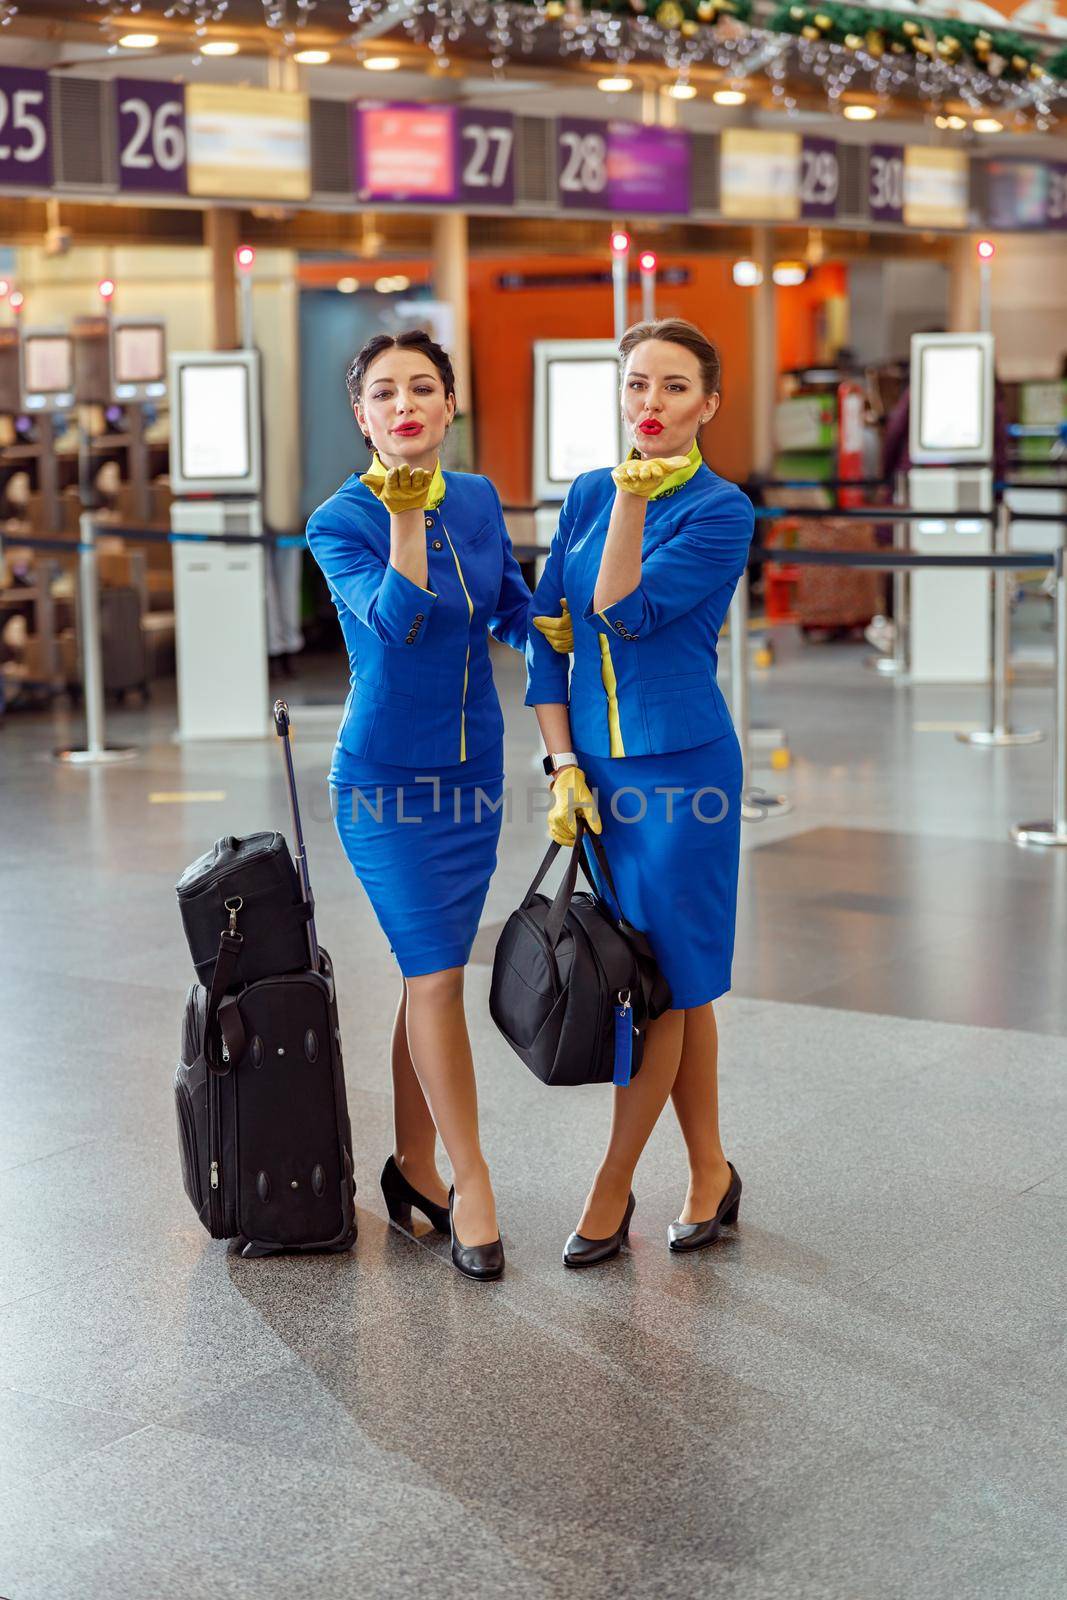 Two women stewardesses blowing kiss at airport terminal by Yaroslav_astakhov